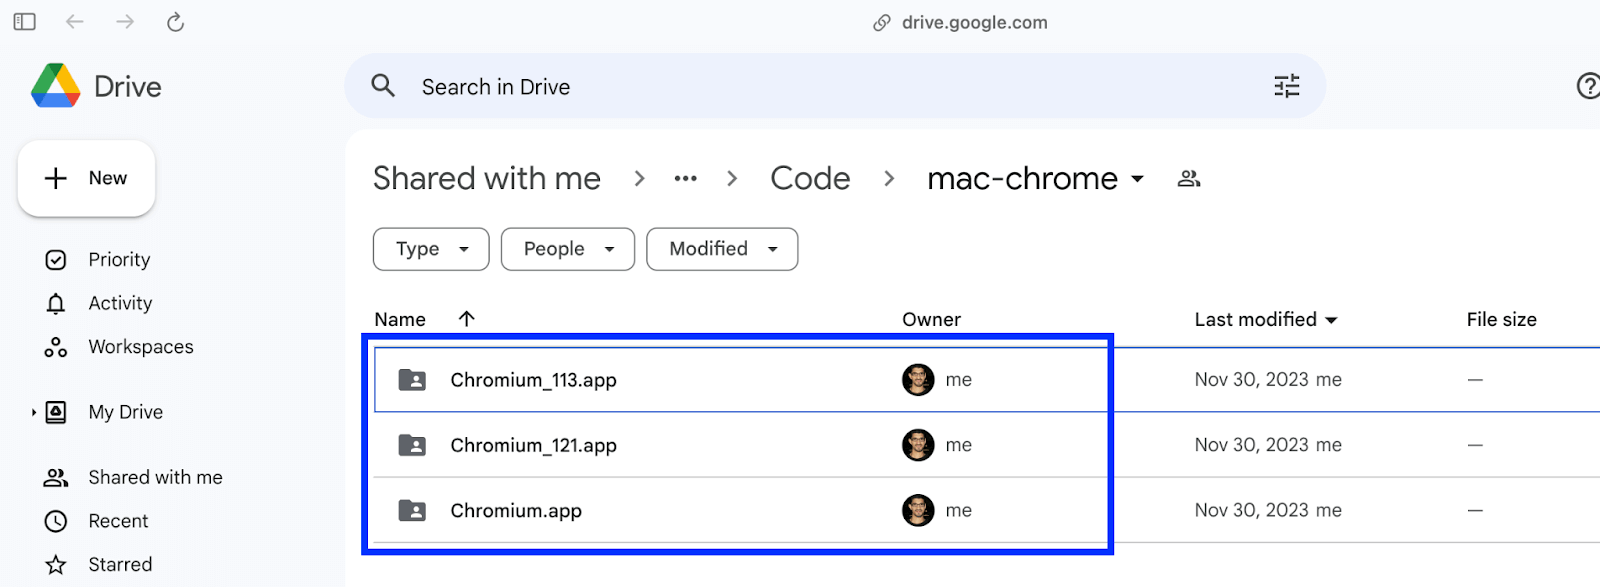 Chromium browser versions in the mac-chrome folder